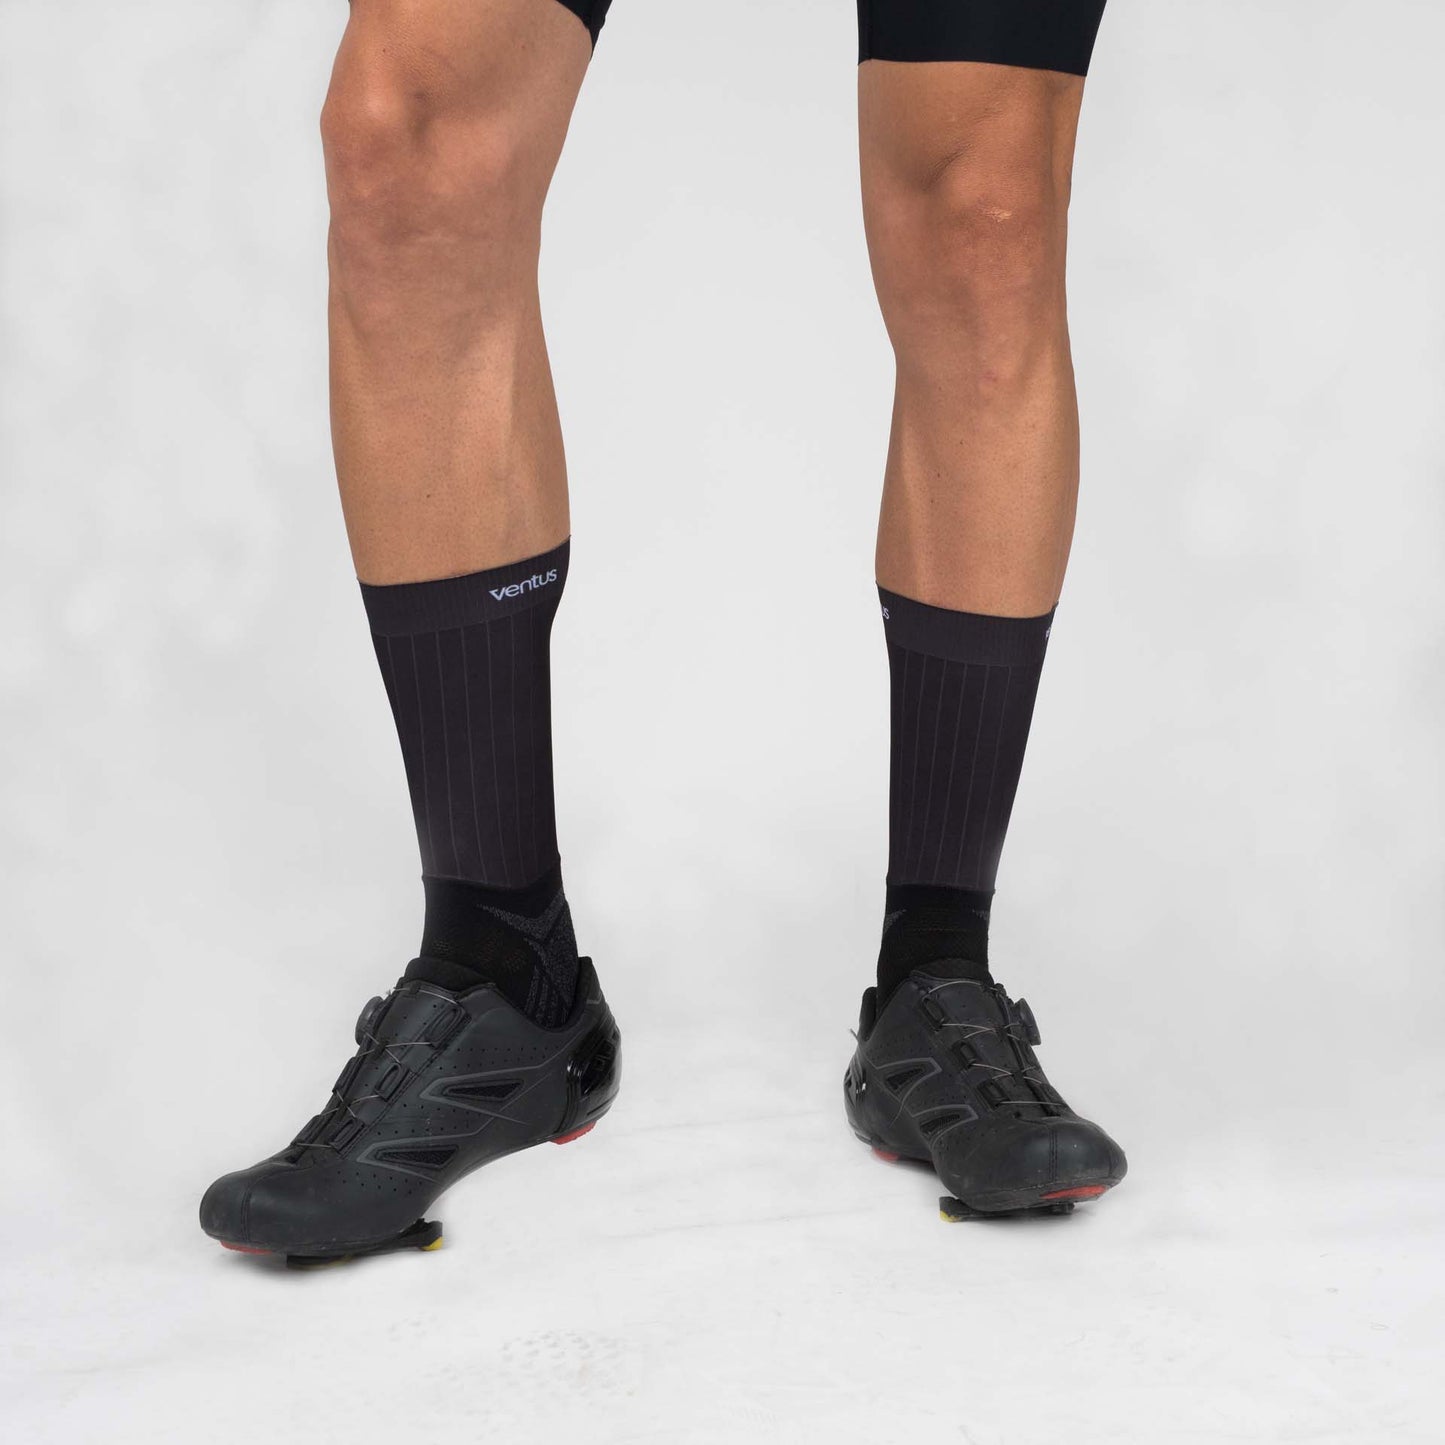 Cycling Socks - Black